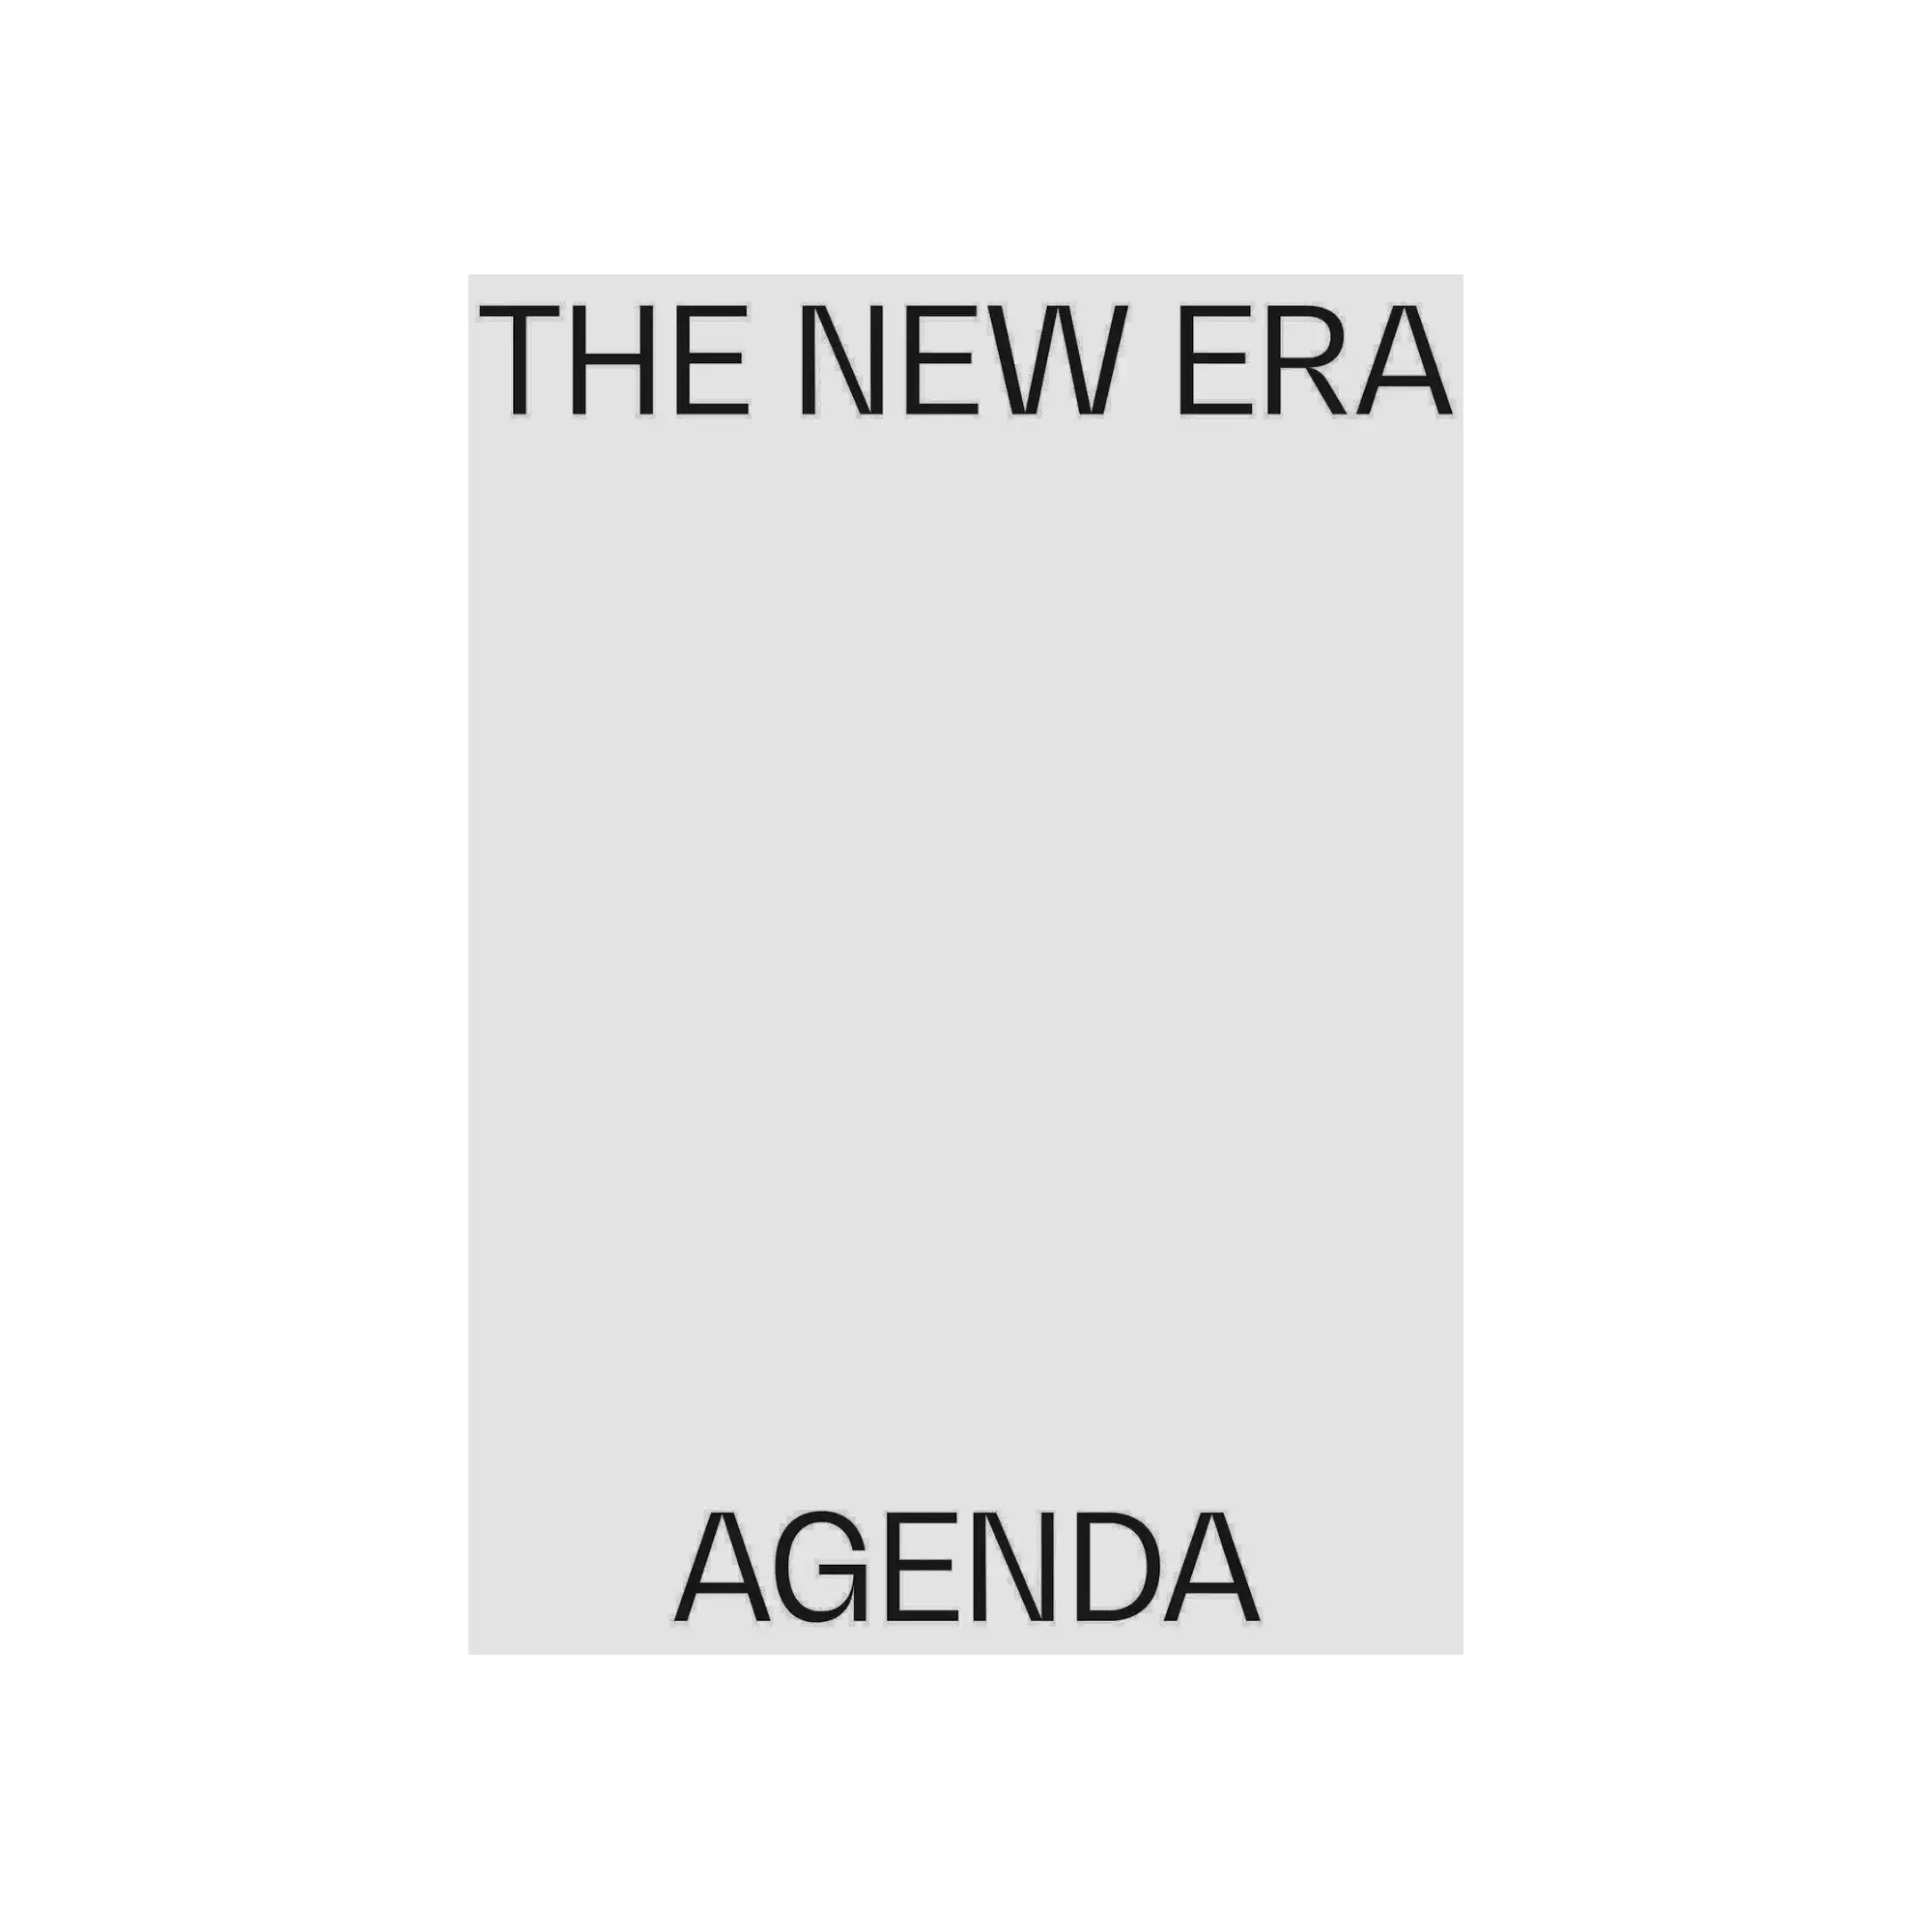 The New Era Agenda